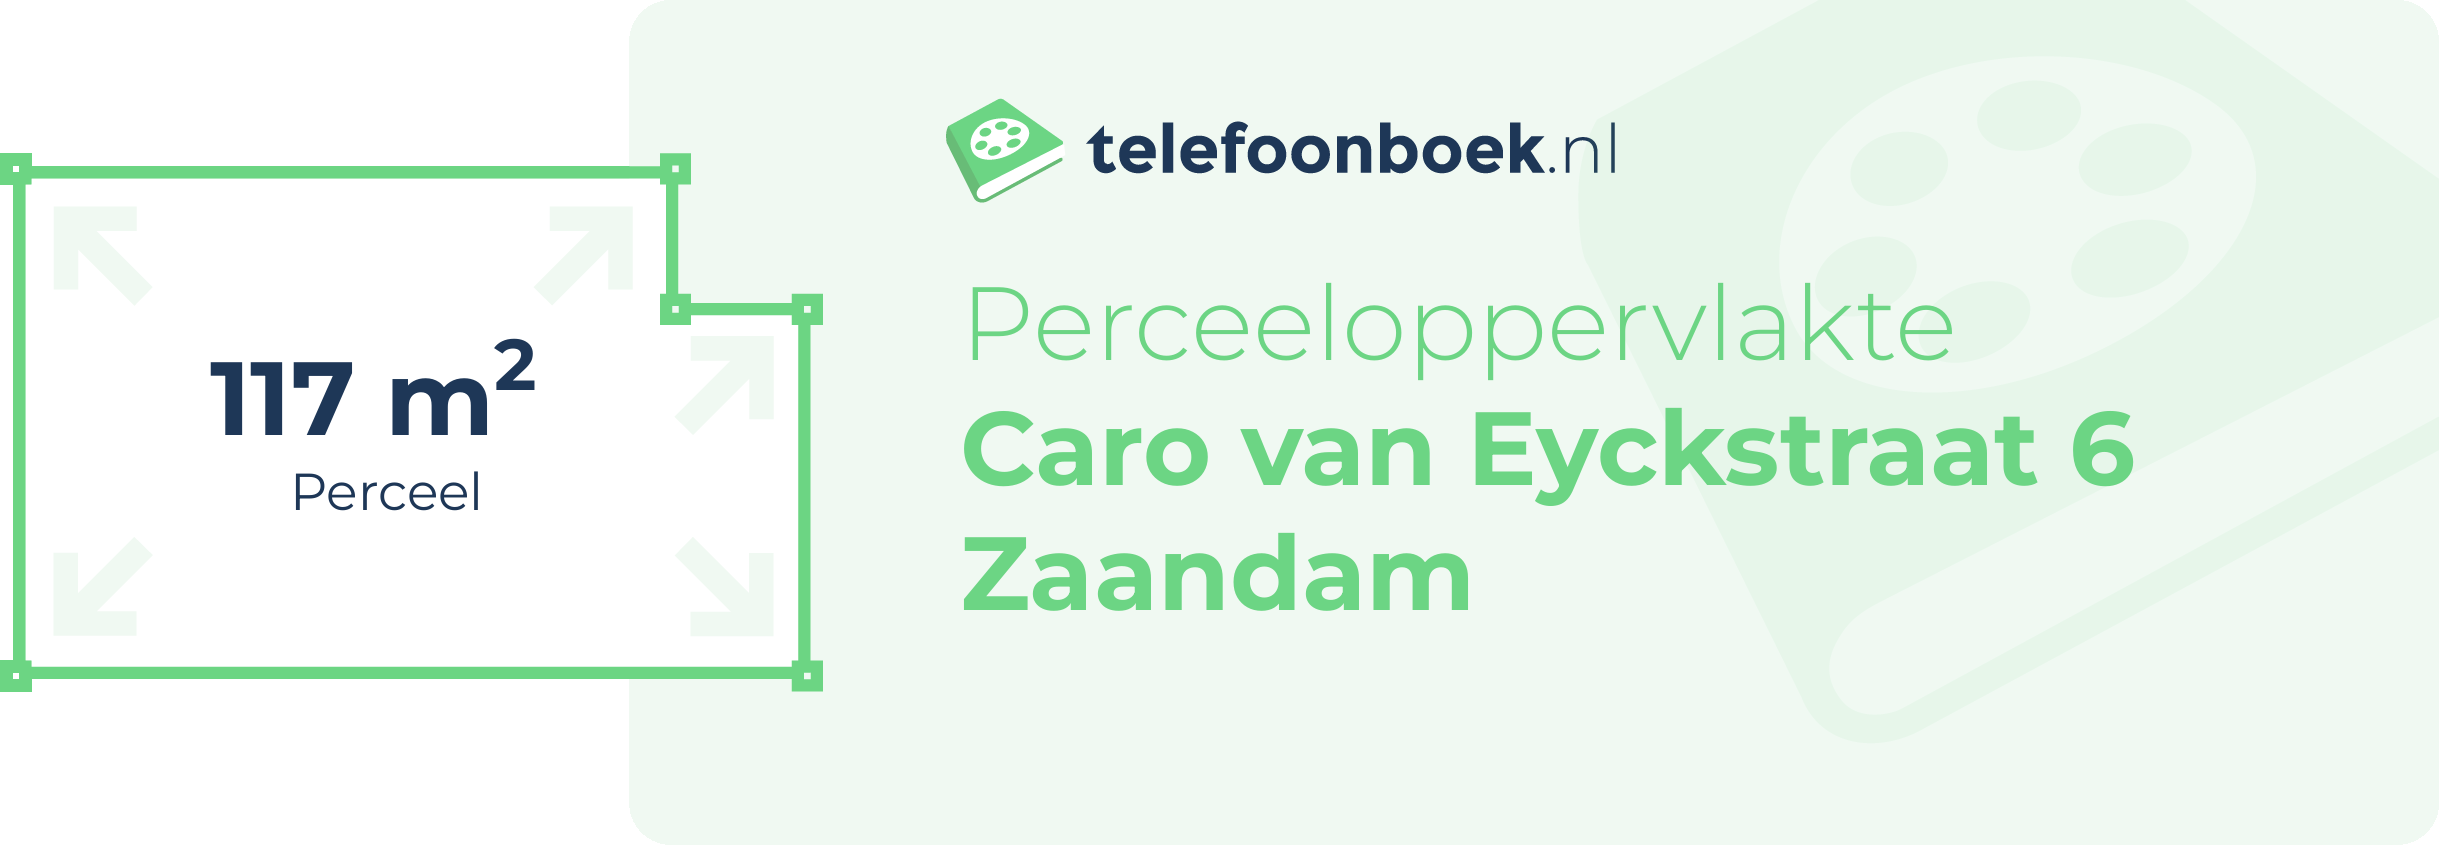 Perceeloppervlakte Caro Van Eyckstraat 6 Zaandam